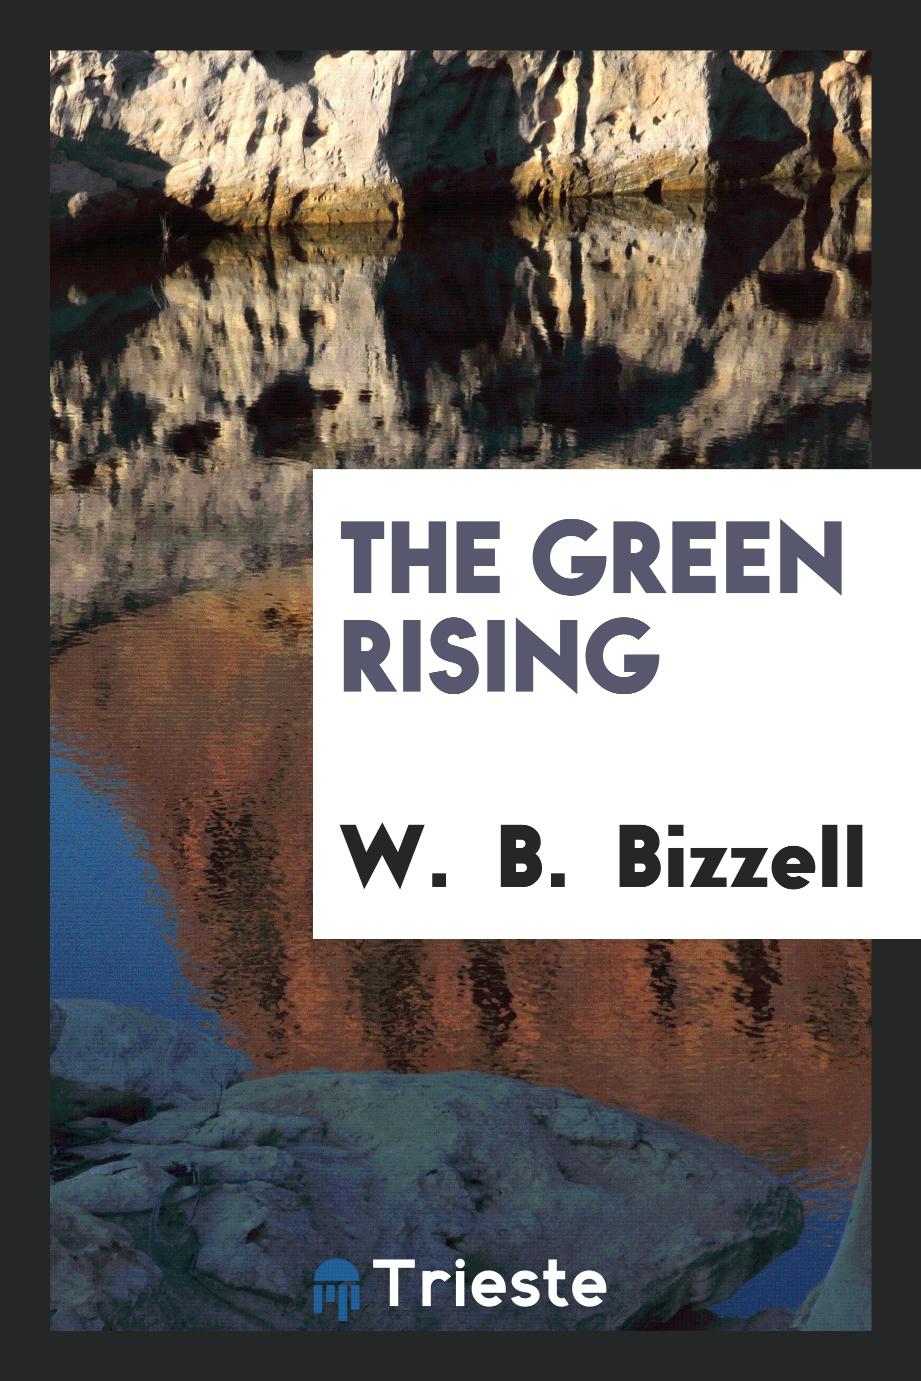 The green rising